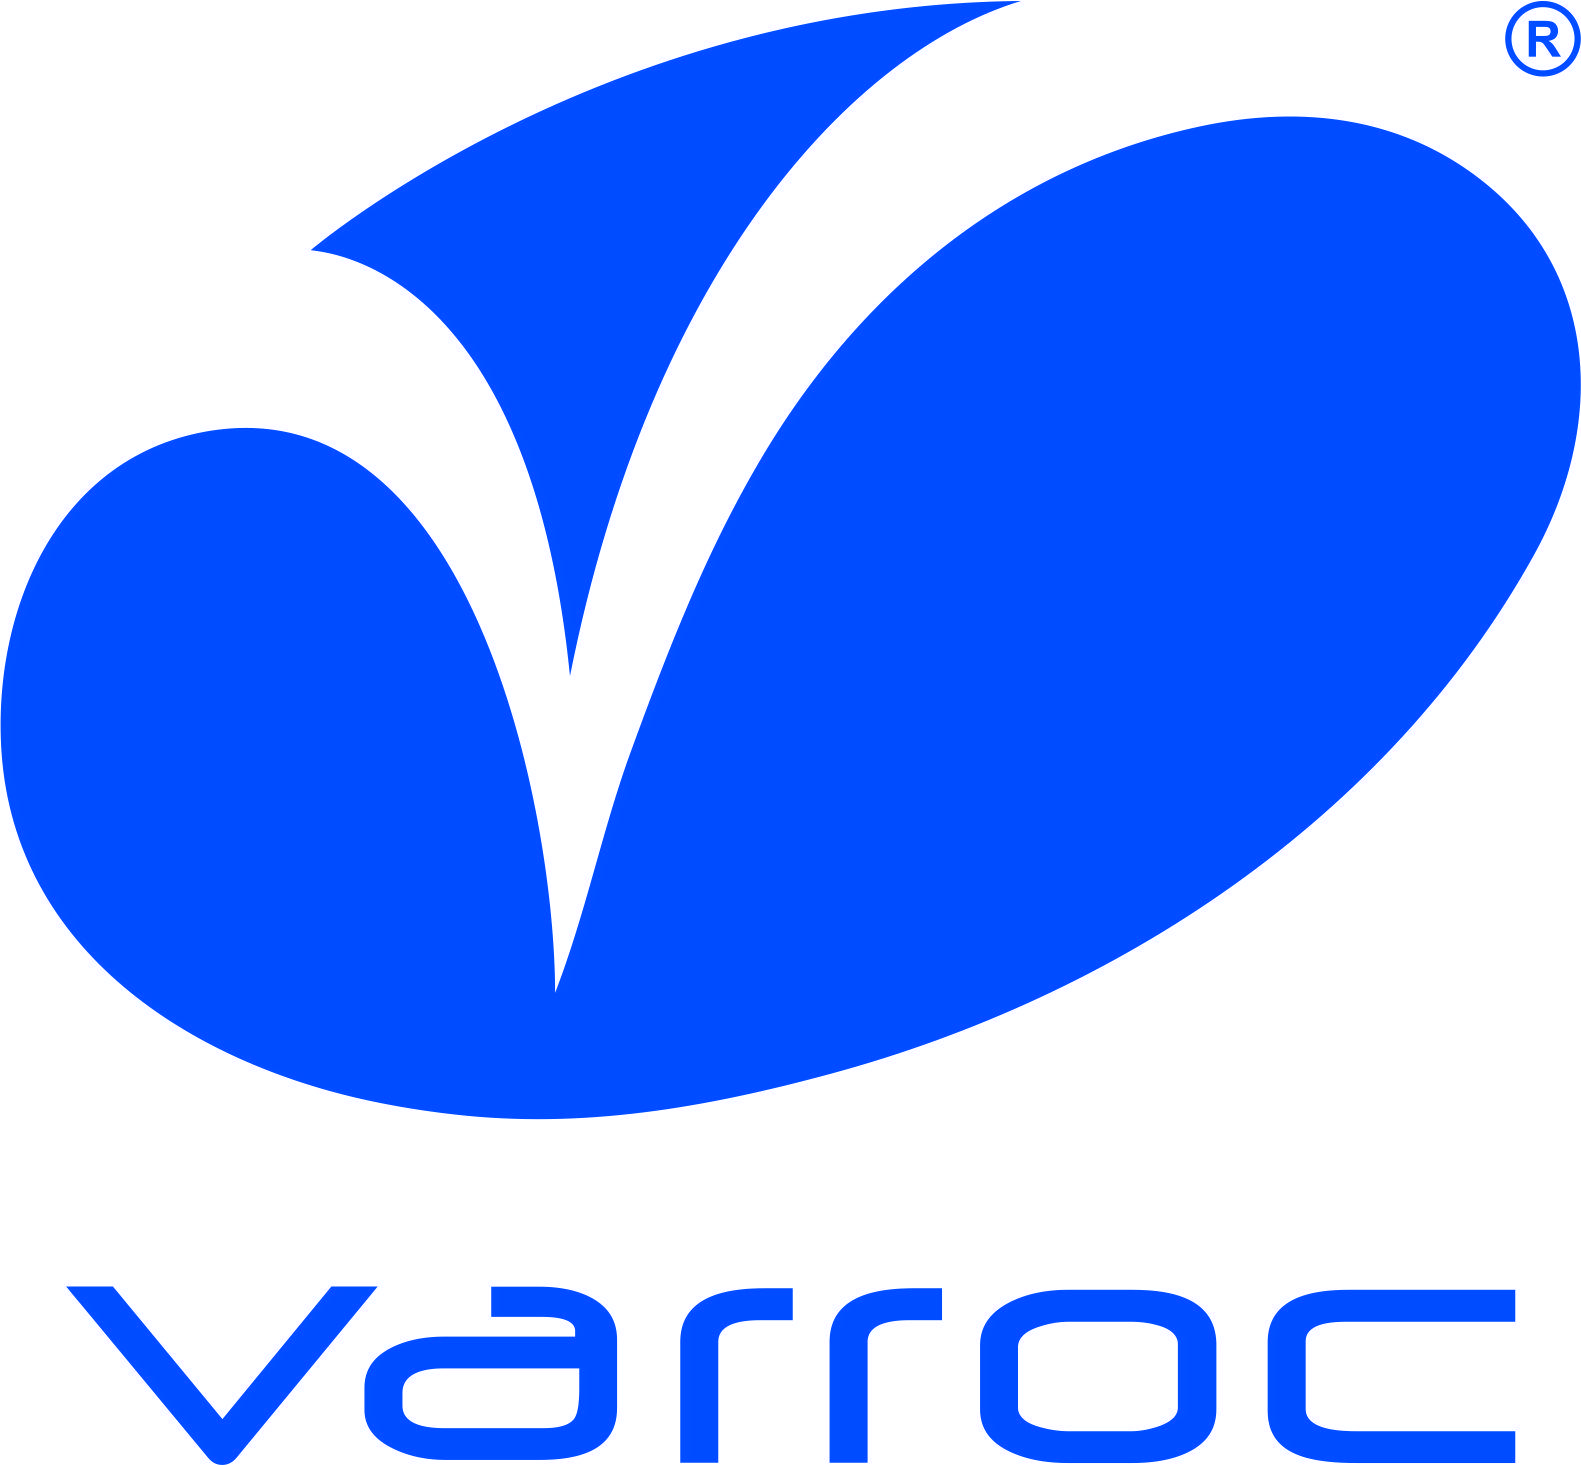 Varroc Logo - Varroc Group. Varroc Group Site